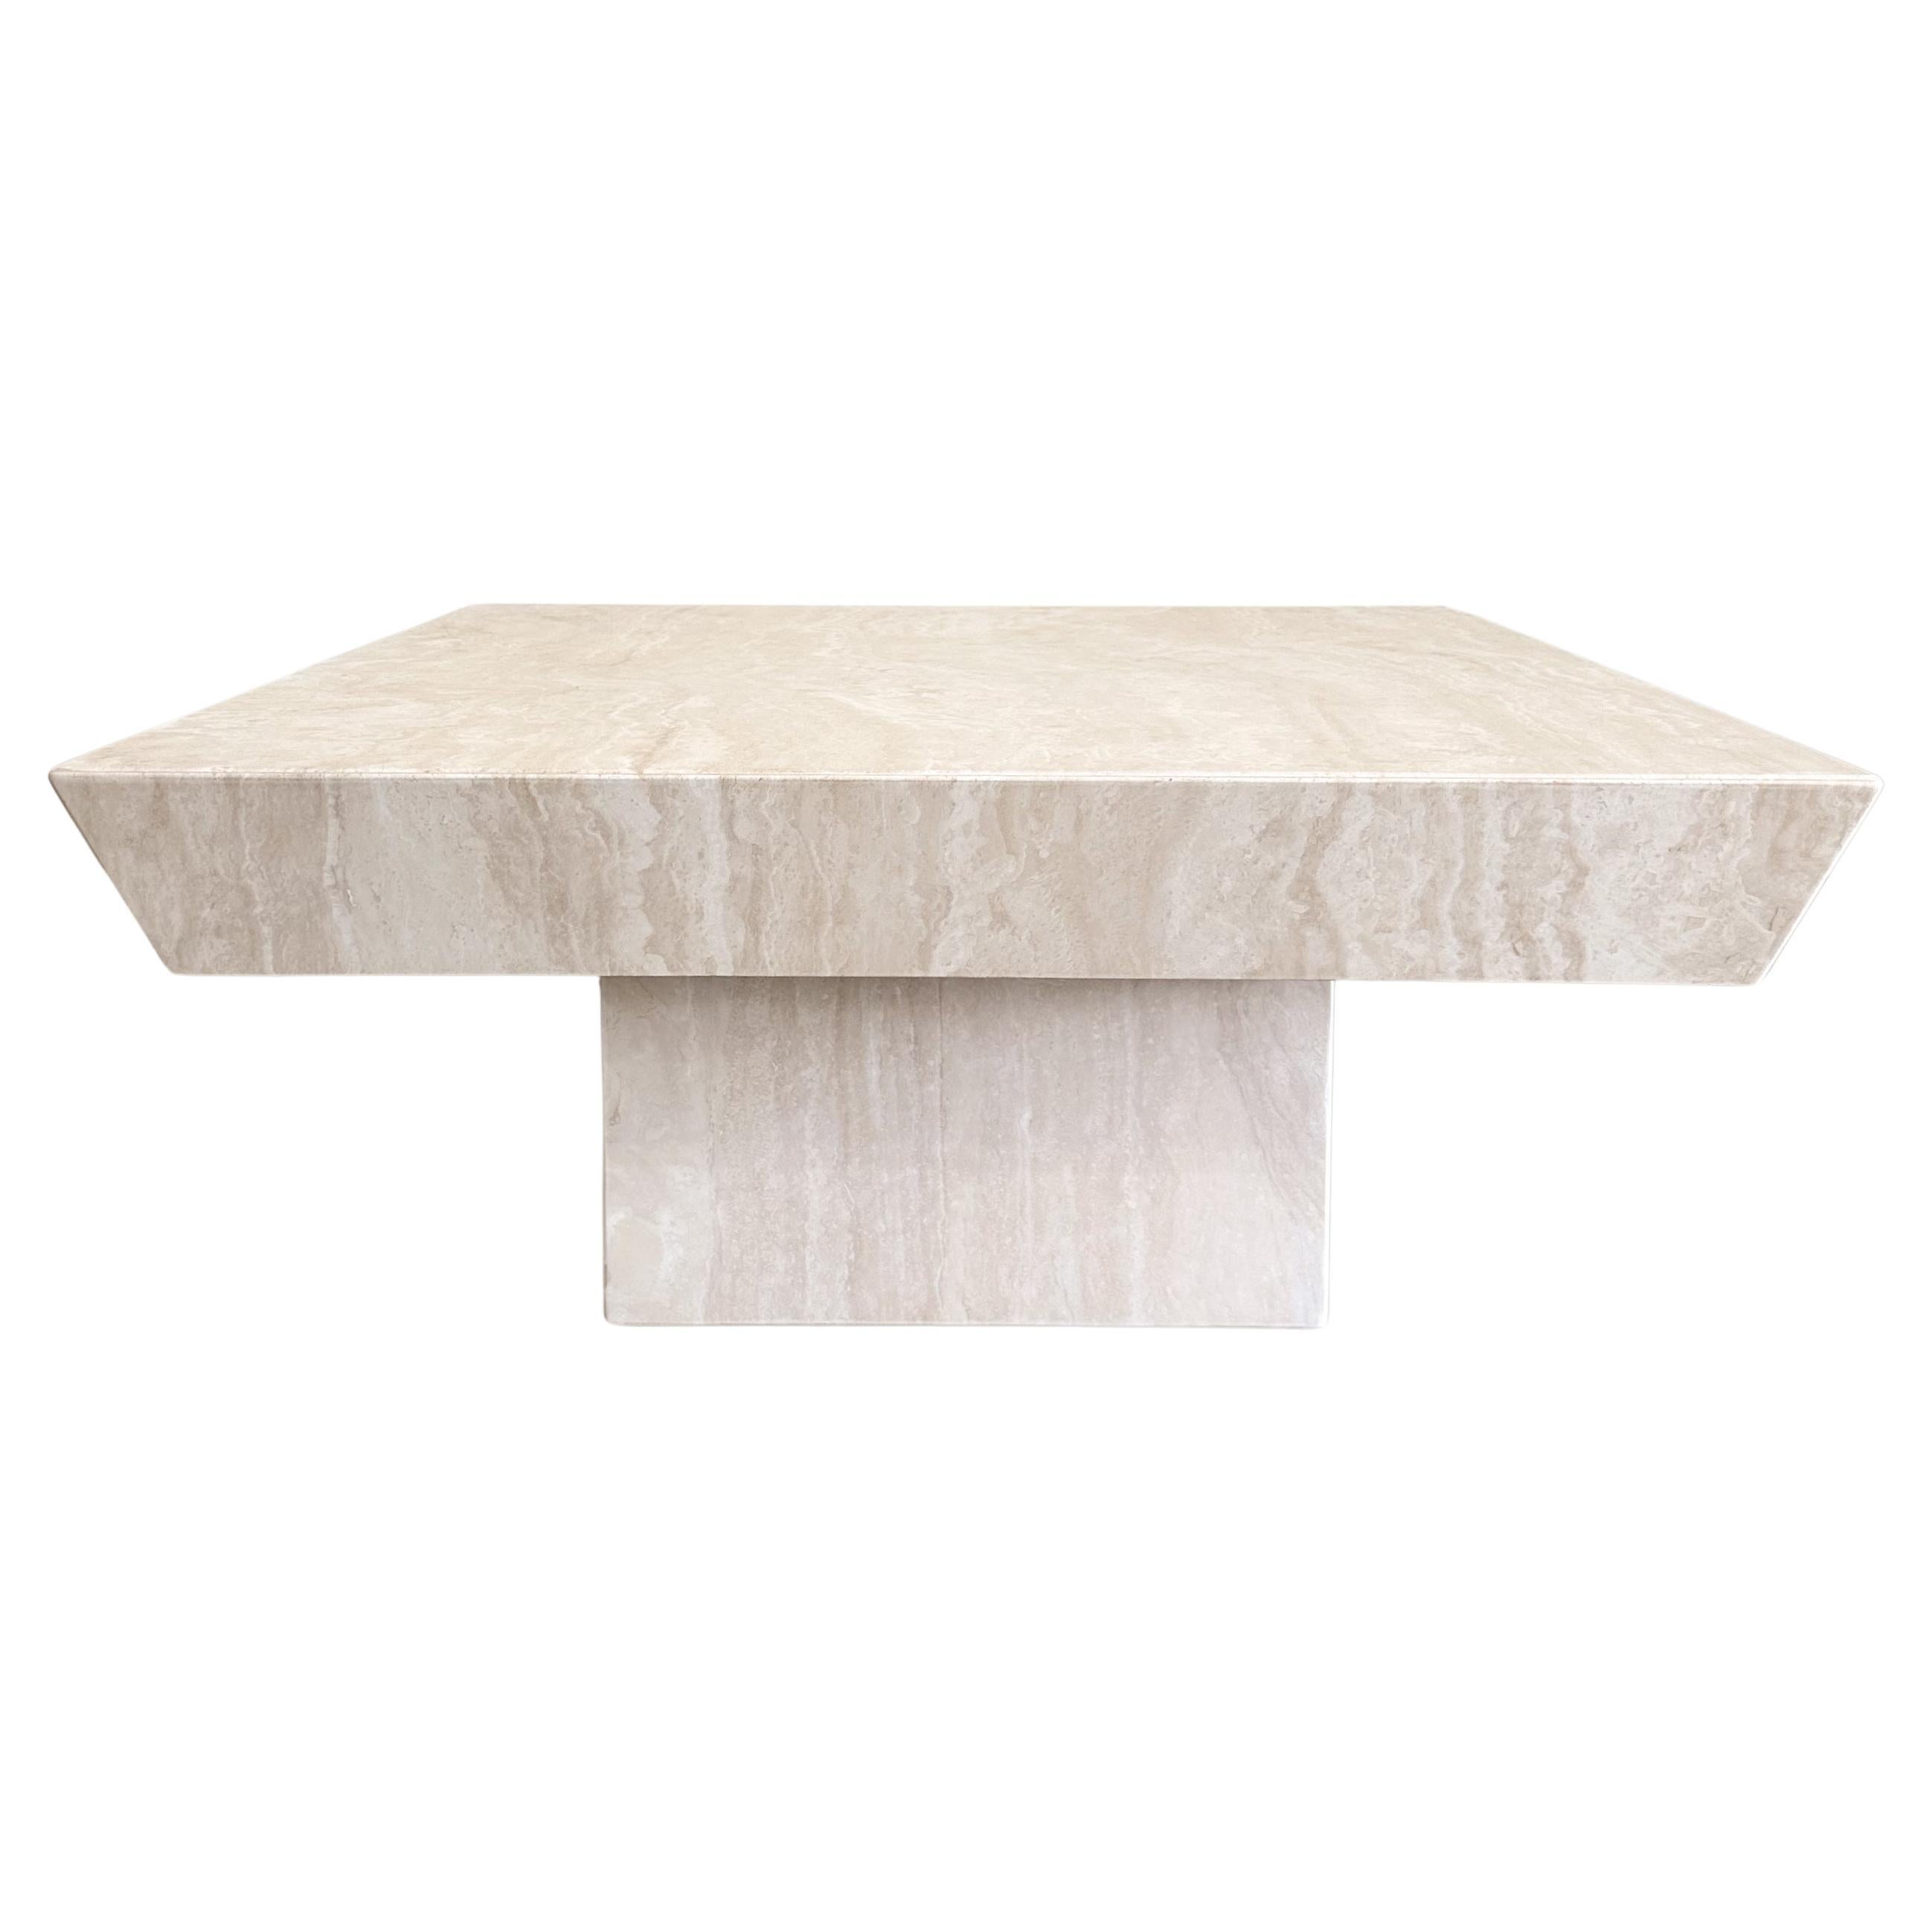 Vintage Square Travertine Stone Coffee Table Marble Postmodern MCM Retro Minimal